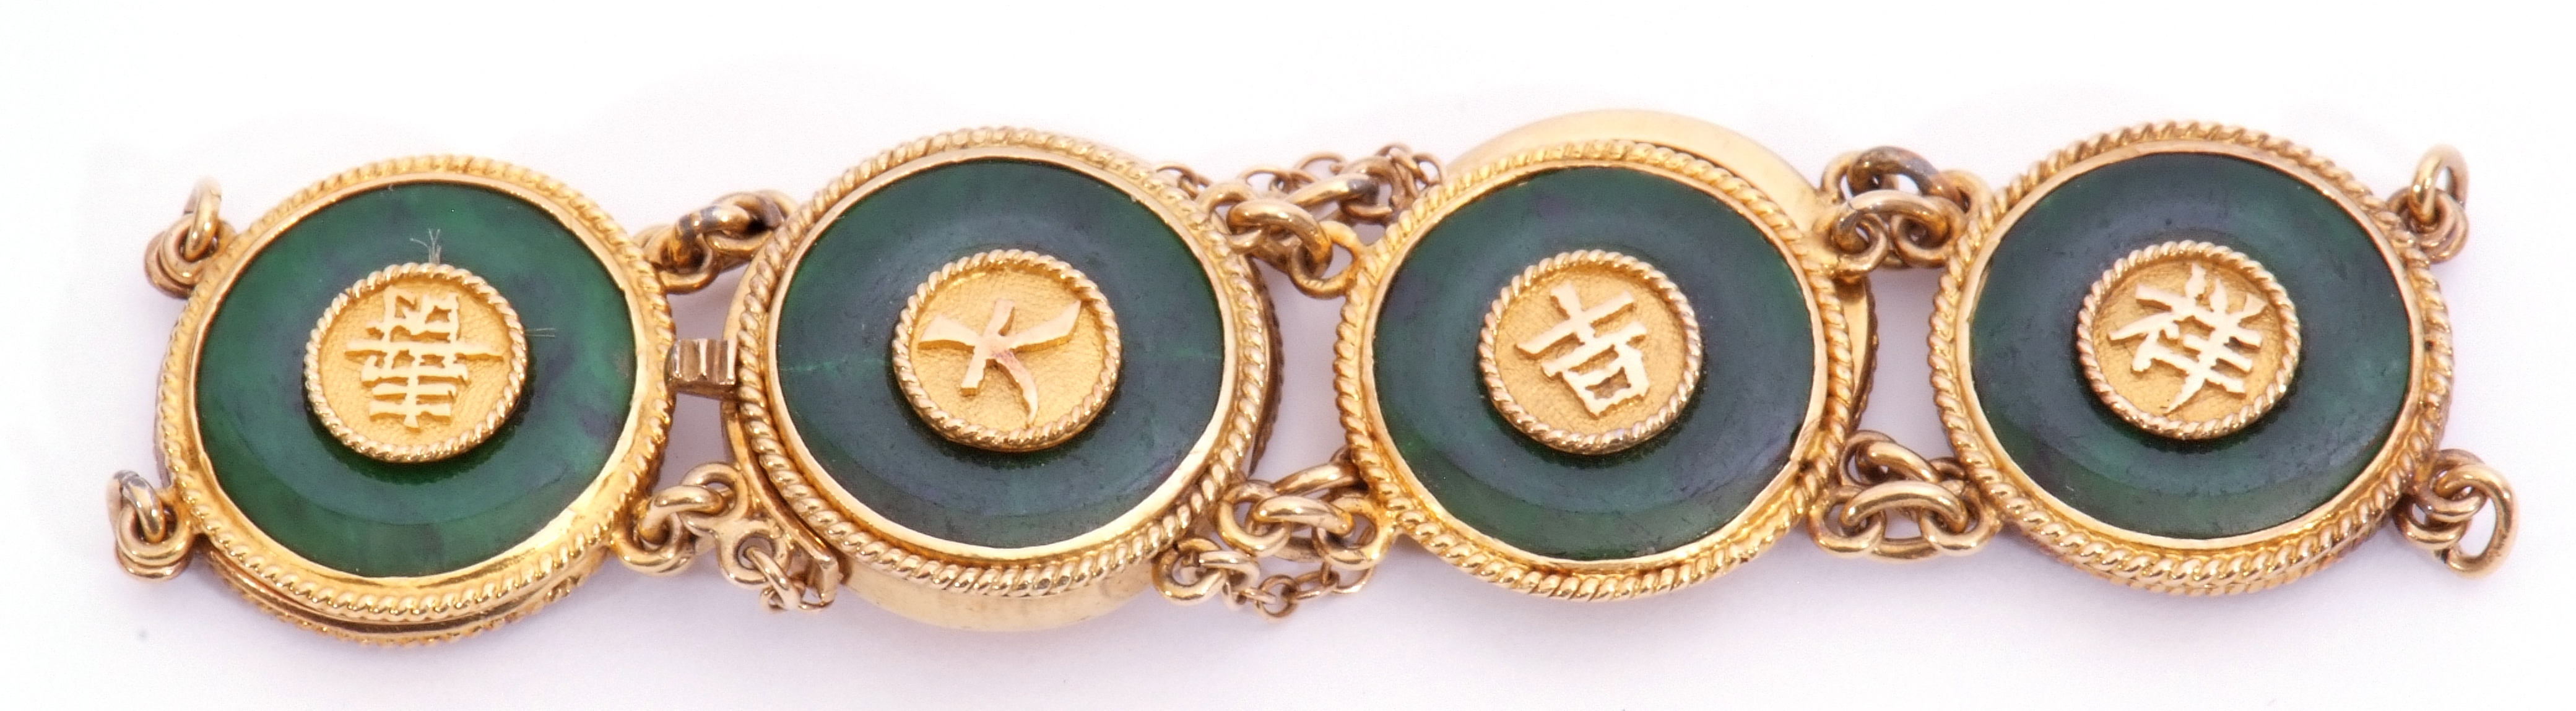 Chinese high grade yellow metal and jade bracelet comprising eight circular jade discs, each - Image 6 of 6